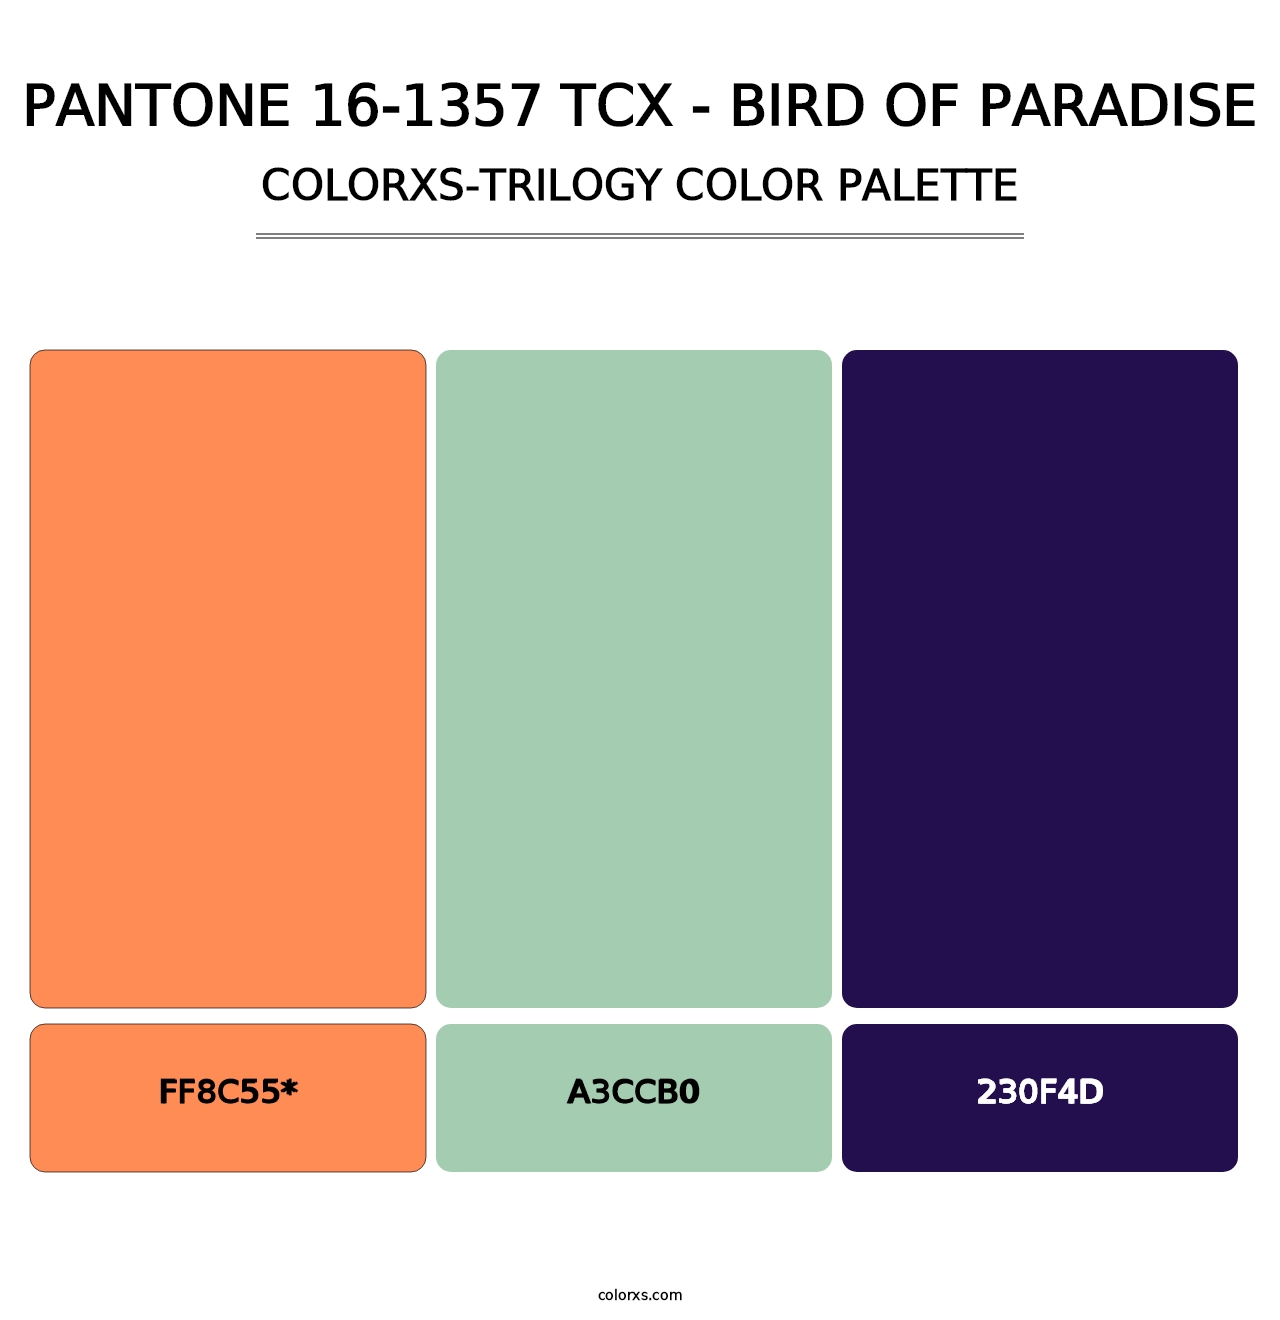 PANTONE 16-1357 TCX - Bird of Paradise - Colorxs Trilogy Palette